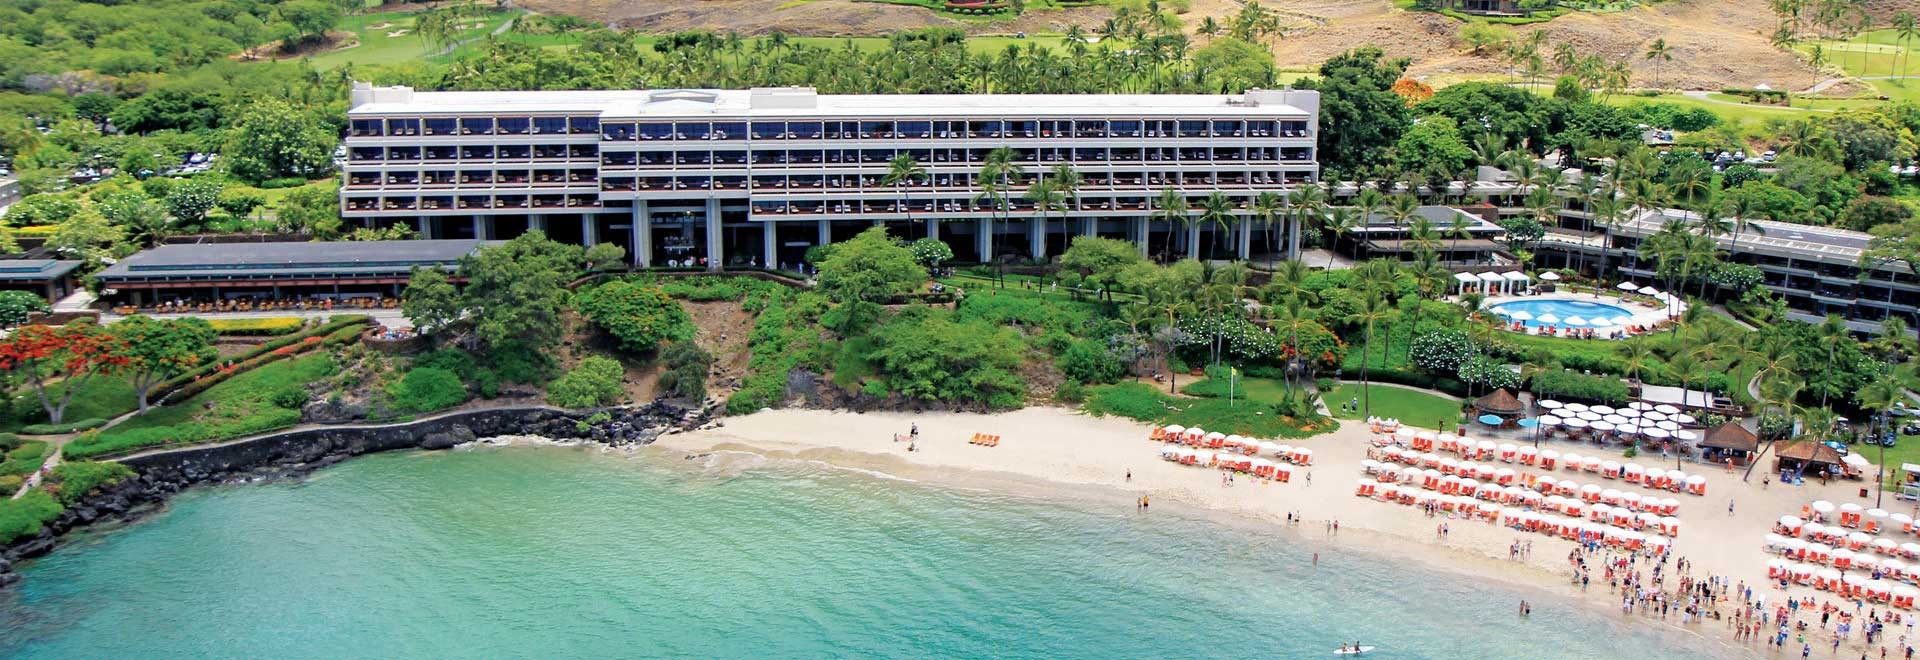 Mauna Kea Beach Hotel, Hawaii - Book. Travel. Play.